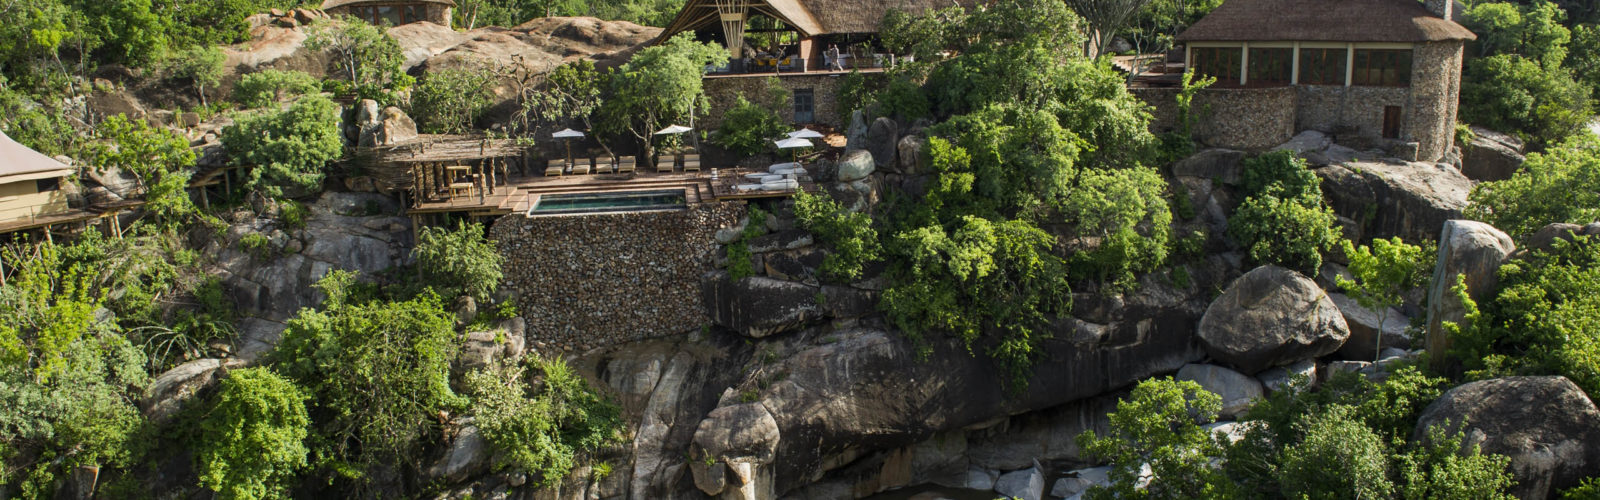 View of Legendary Mwiba Lodge set upon the rocks among the trees above the river, Mwiba Wildlife Reserve Tanzania